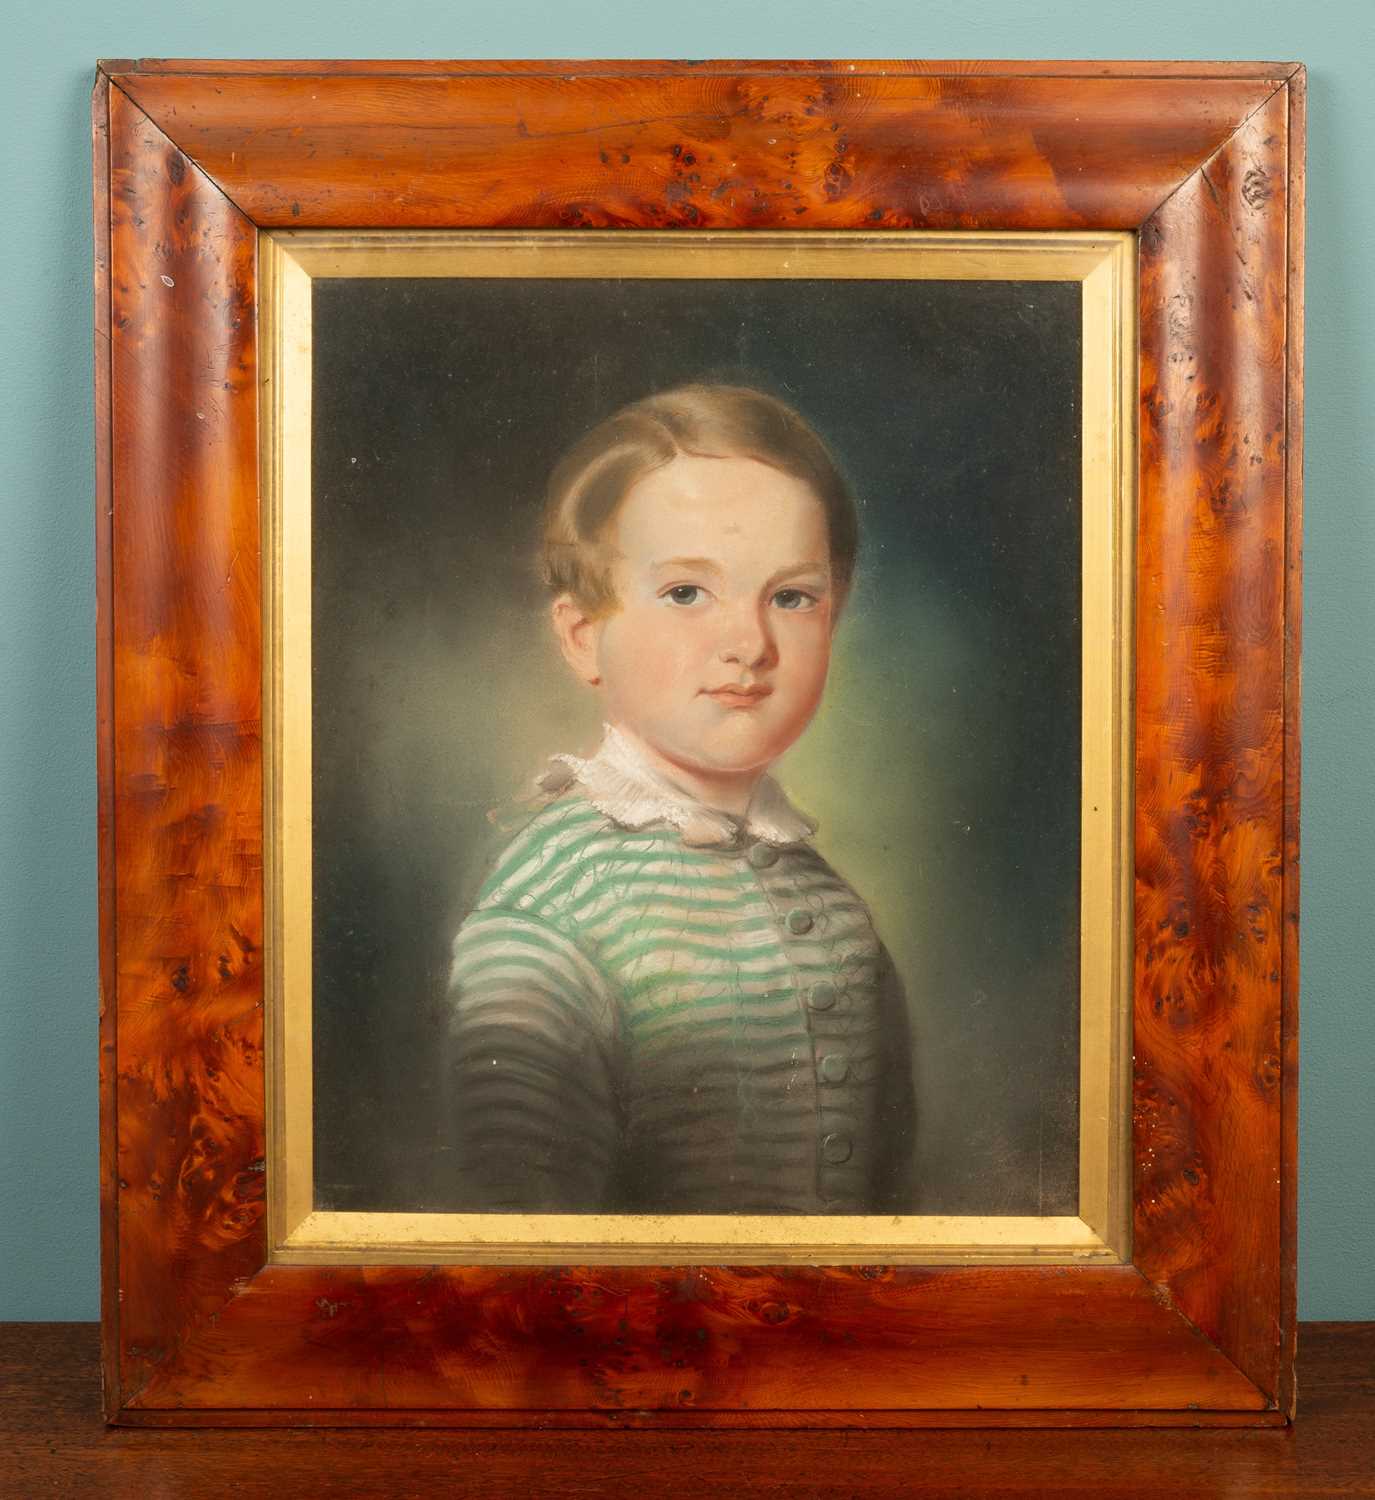 Lot 63 - 19th century Continental school, a head and shoulder portrait of a boy